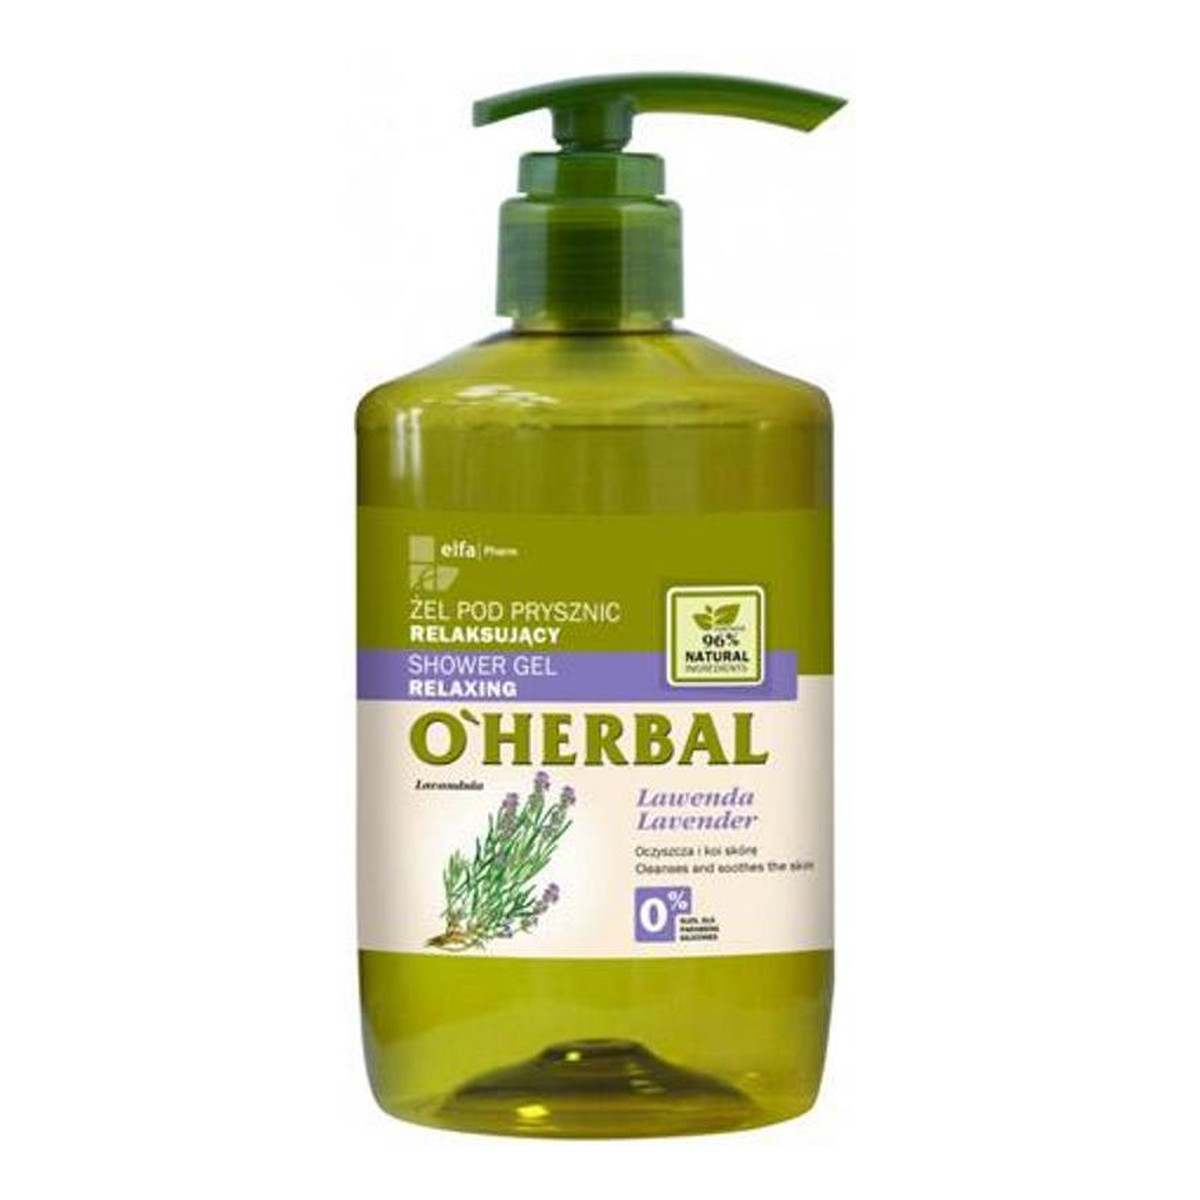 O'Herbal Shower Gel Relaxing Żel pod prysznic relaksujący z ekstraktem z lawendy 750ml